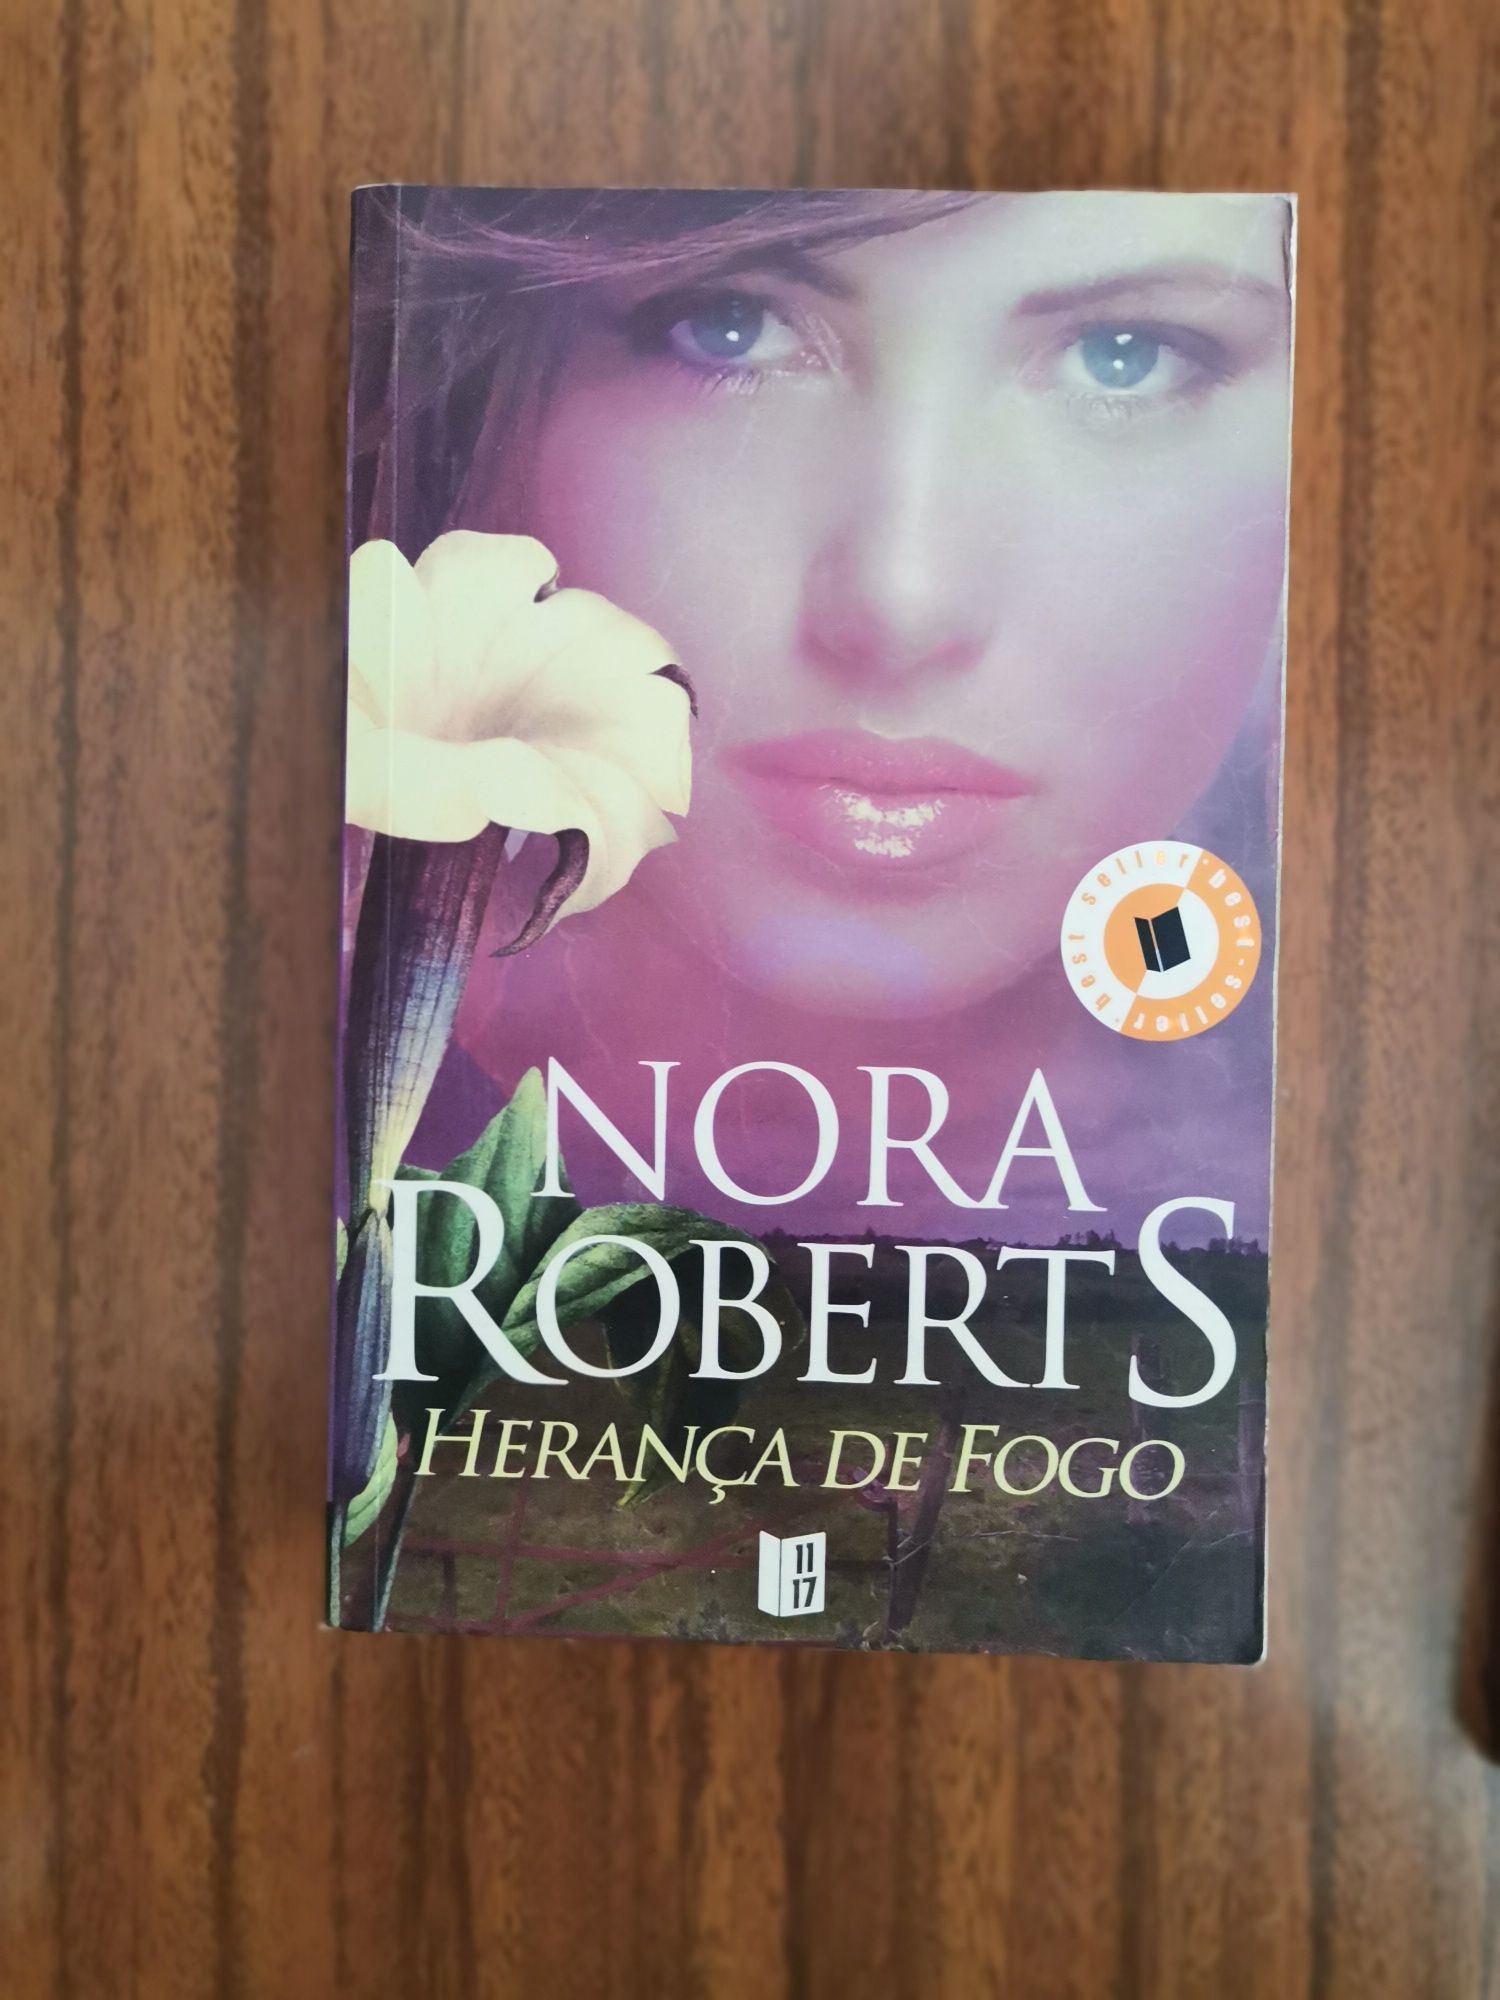 Nora Roberts- herança de fogo